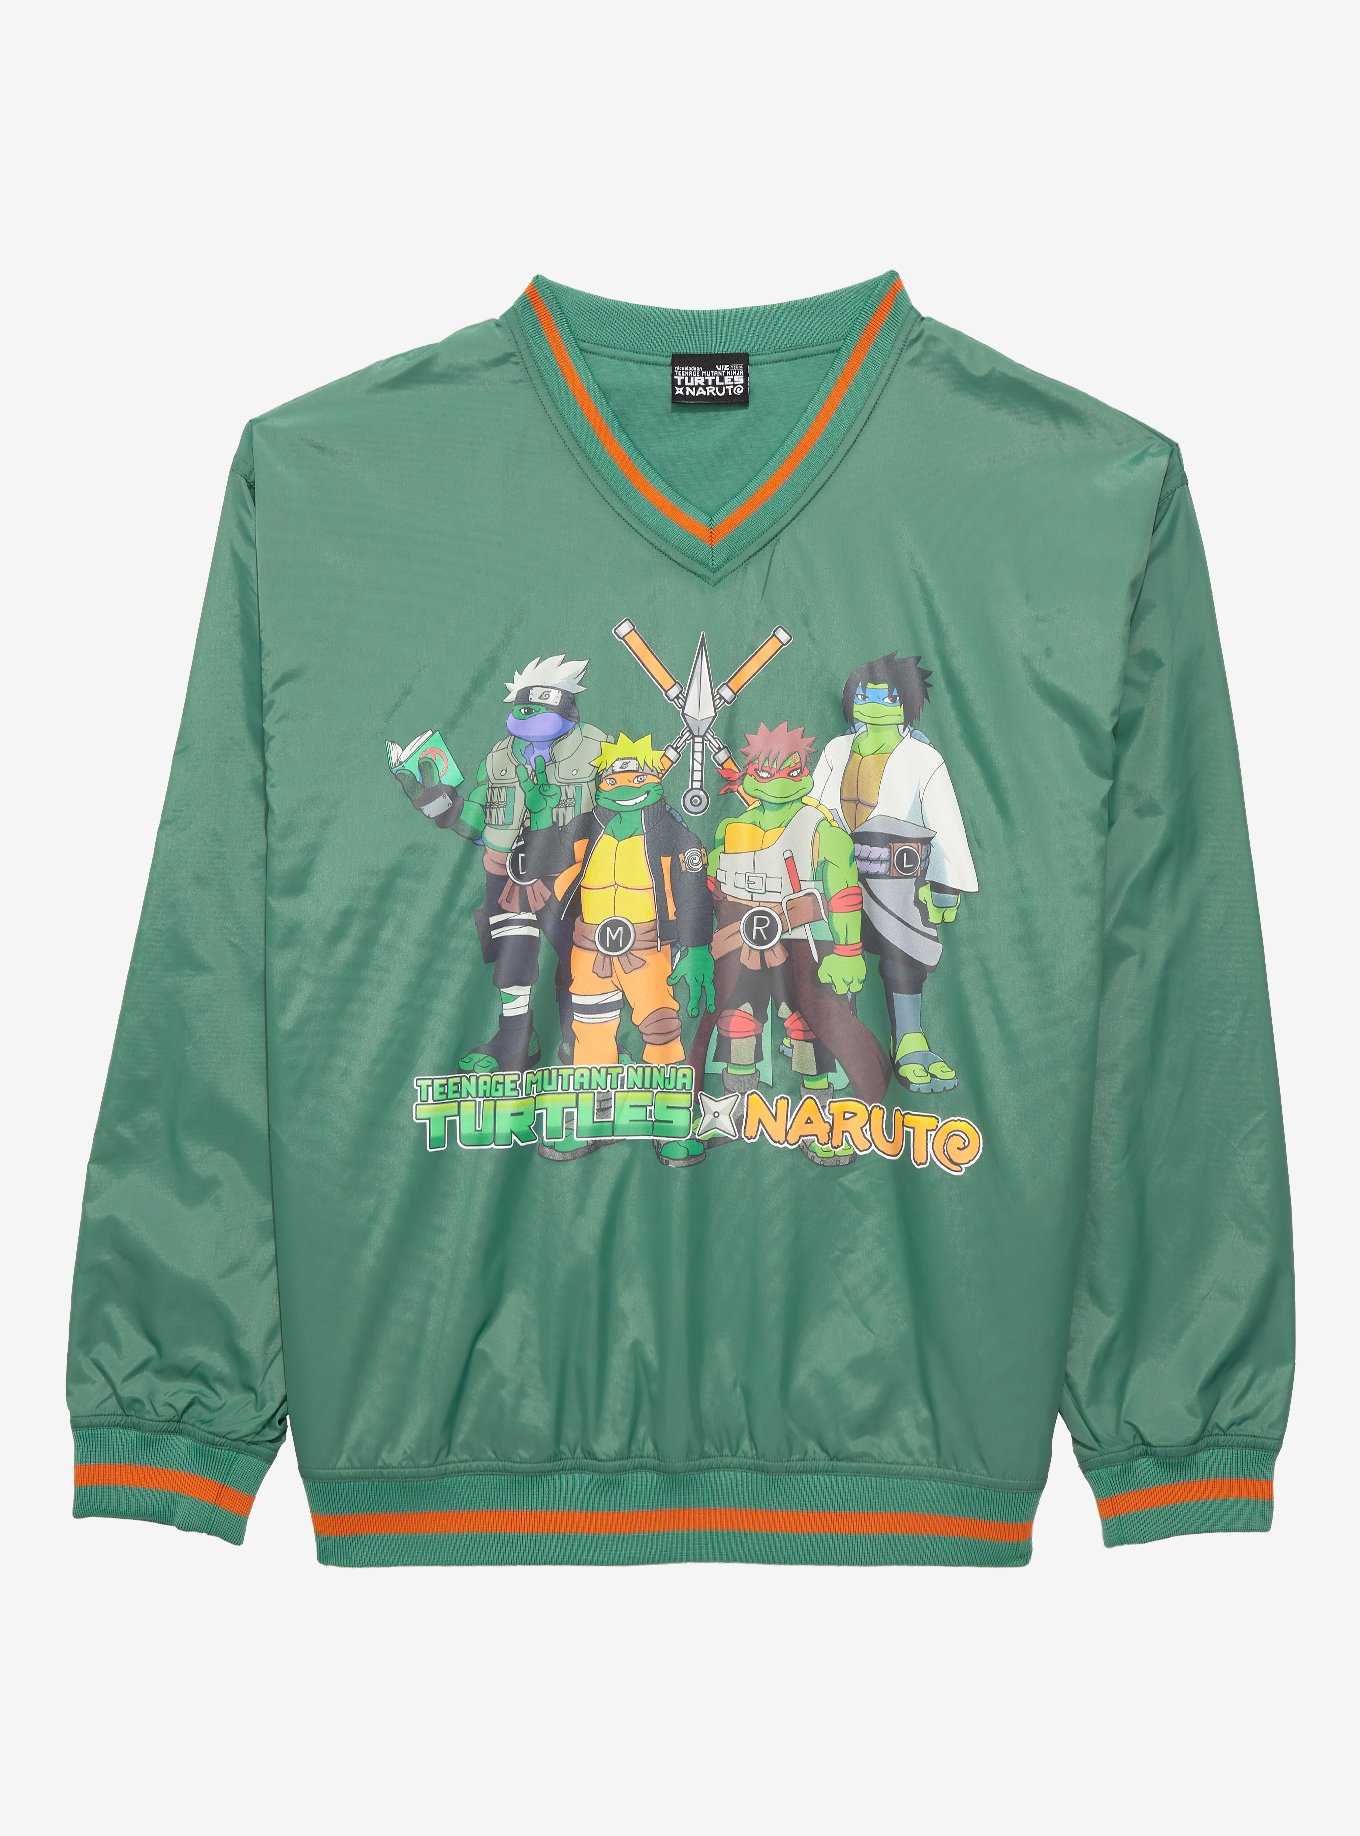 Teenage Mutant Ninja Turtles x Naruto Group Portrait Sweater - BoxLunch Exclusive, , hi-res